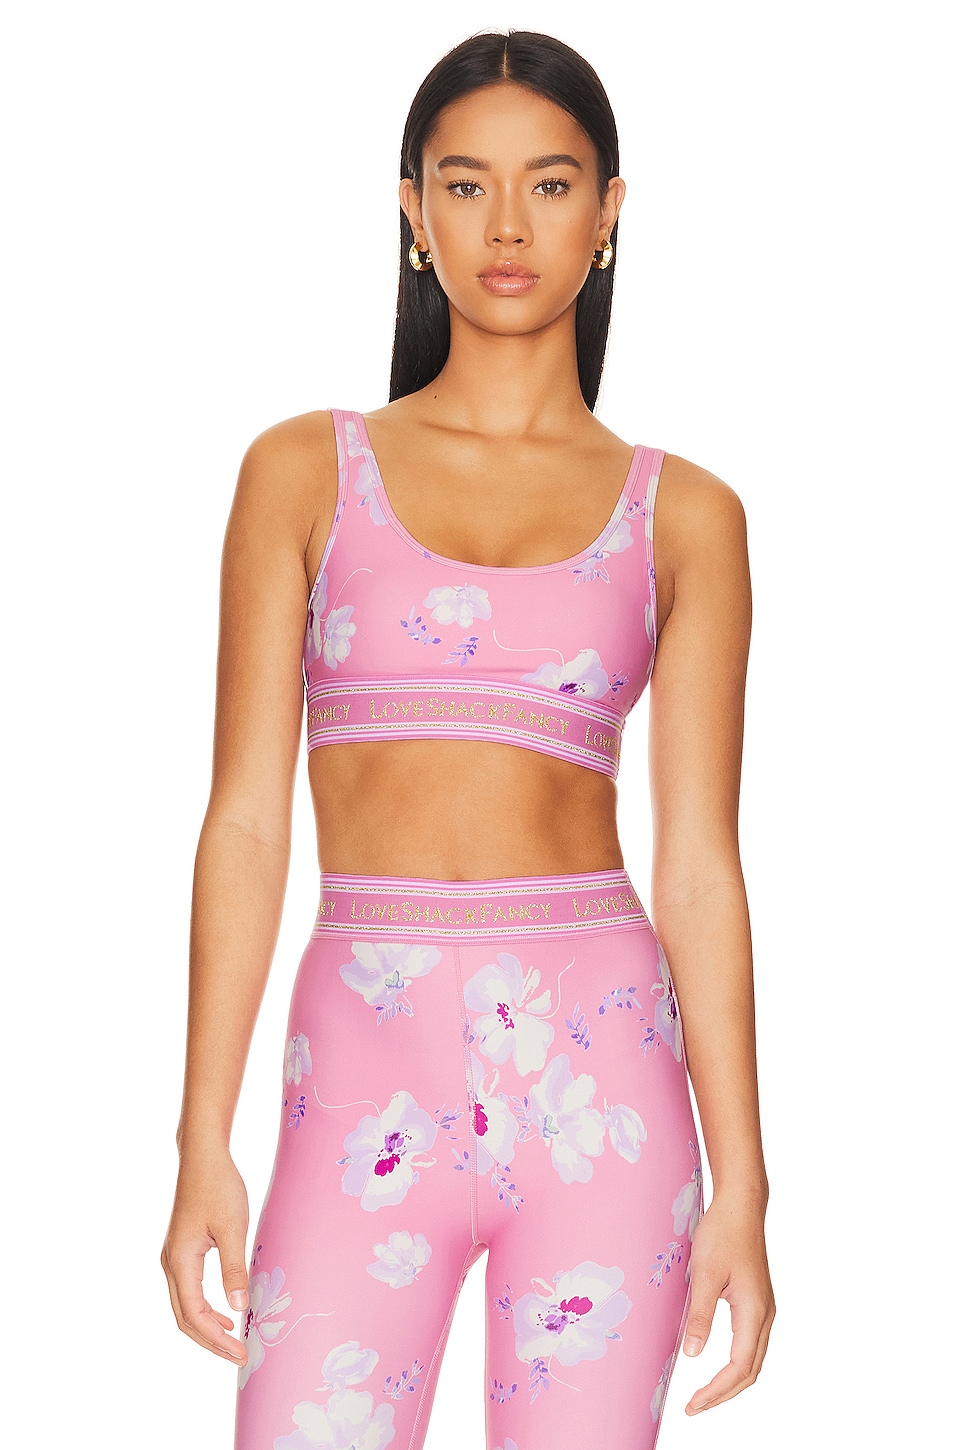 Love Shack Fancy Sports Bra Pink Size L - $49 (61% Off Retail